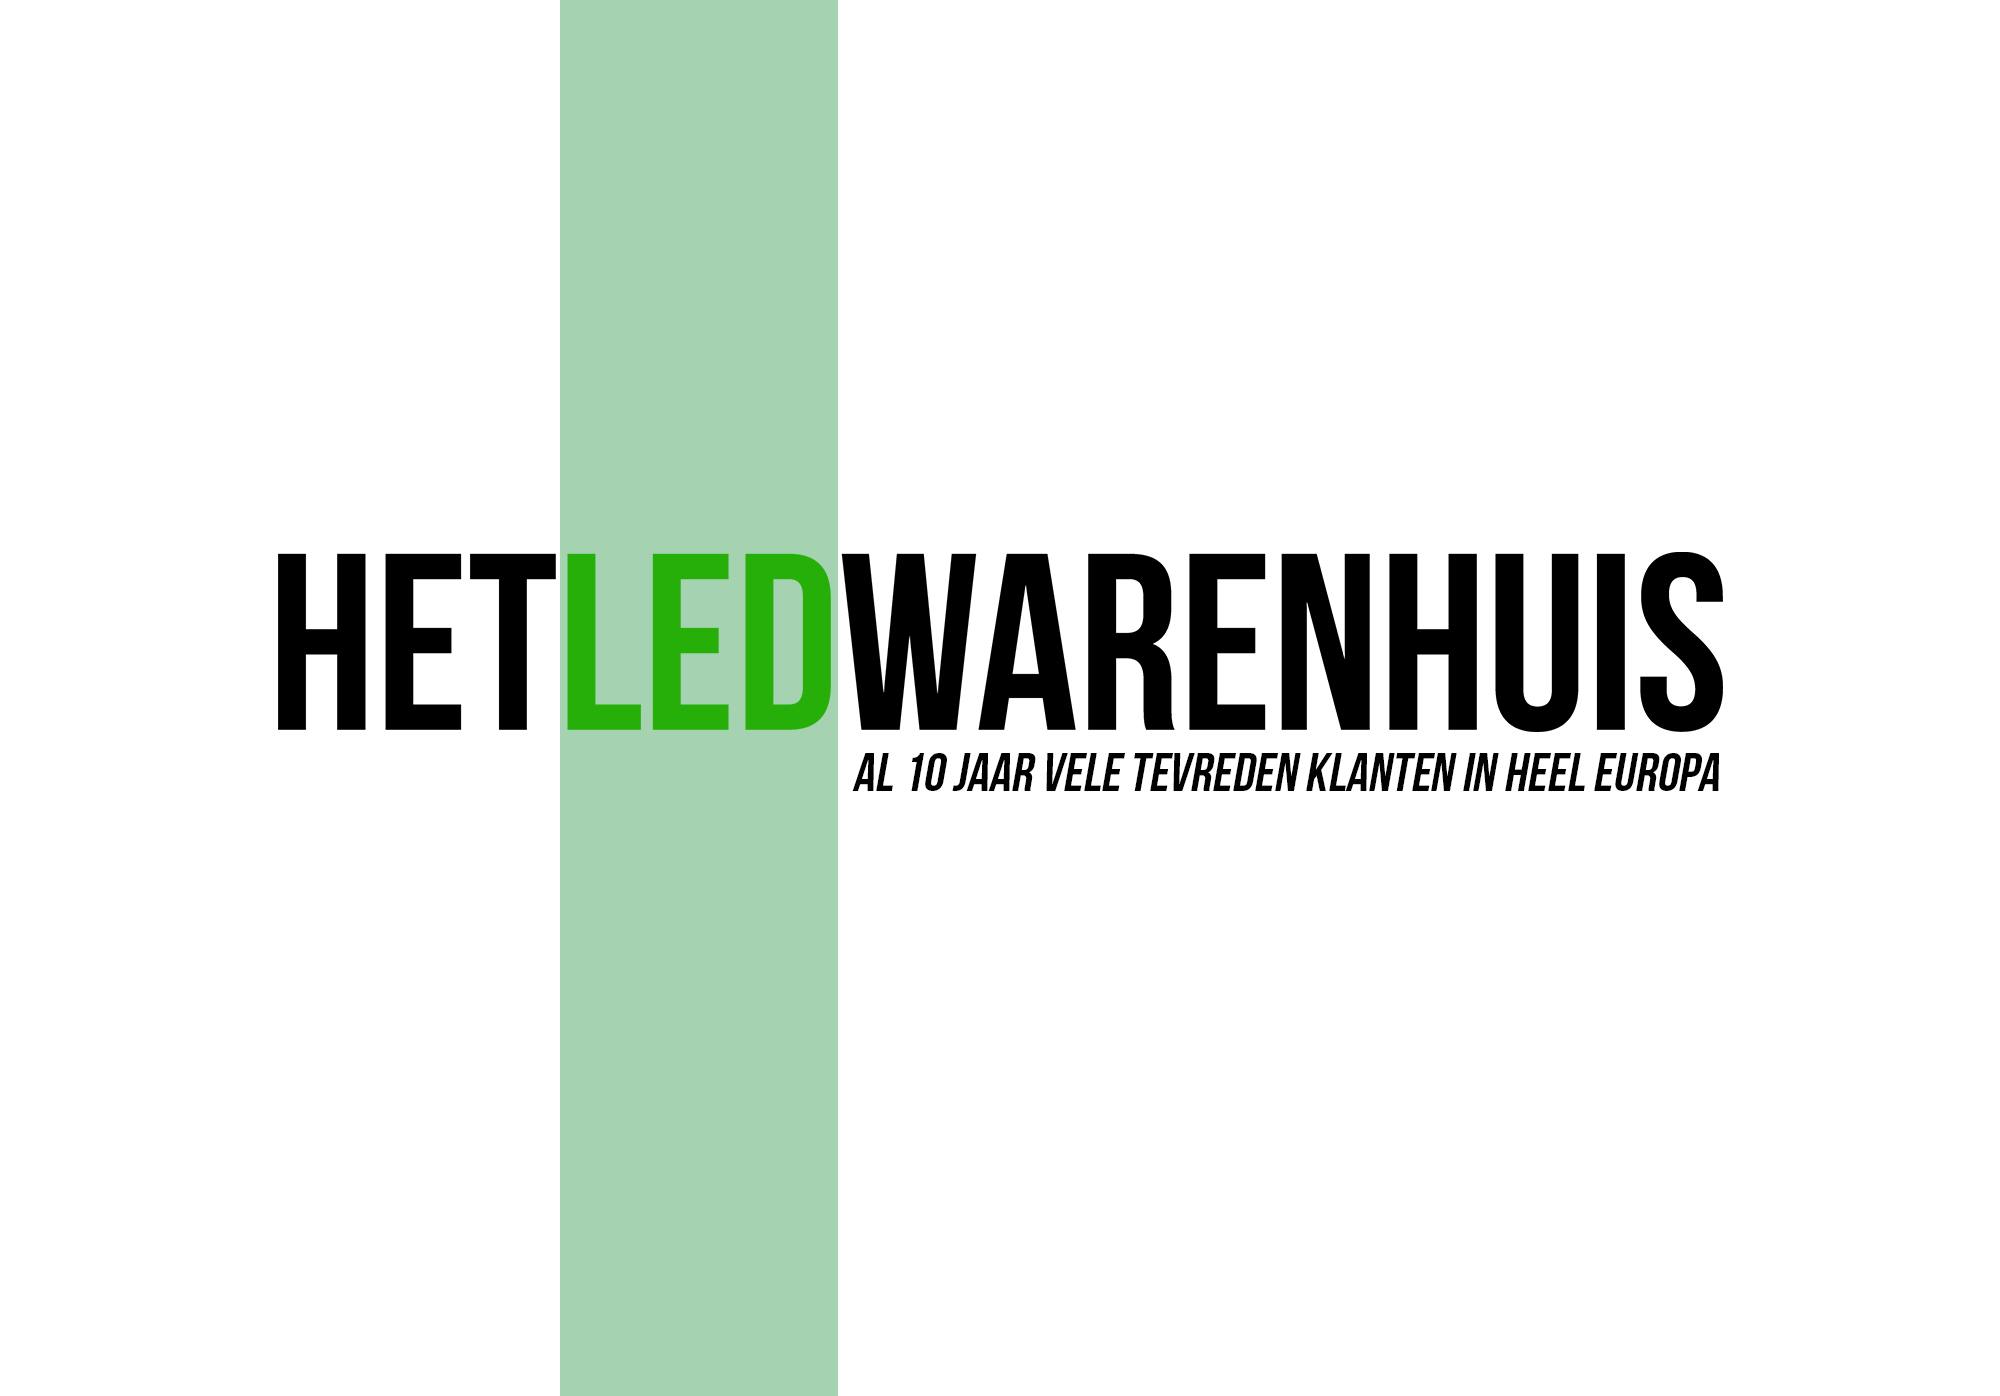 www.hetledwarenhuis.nl